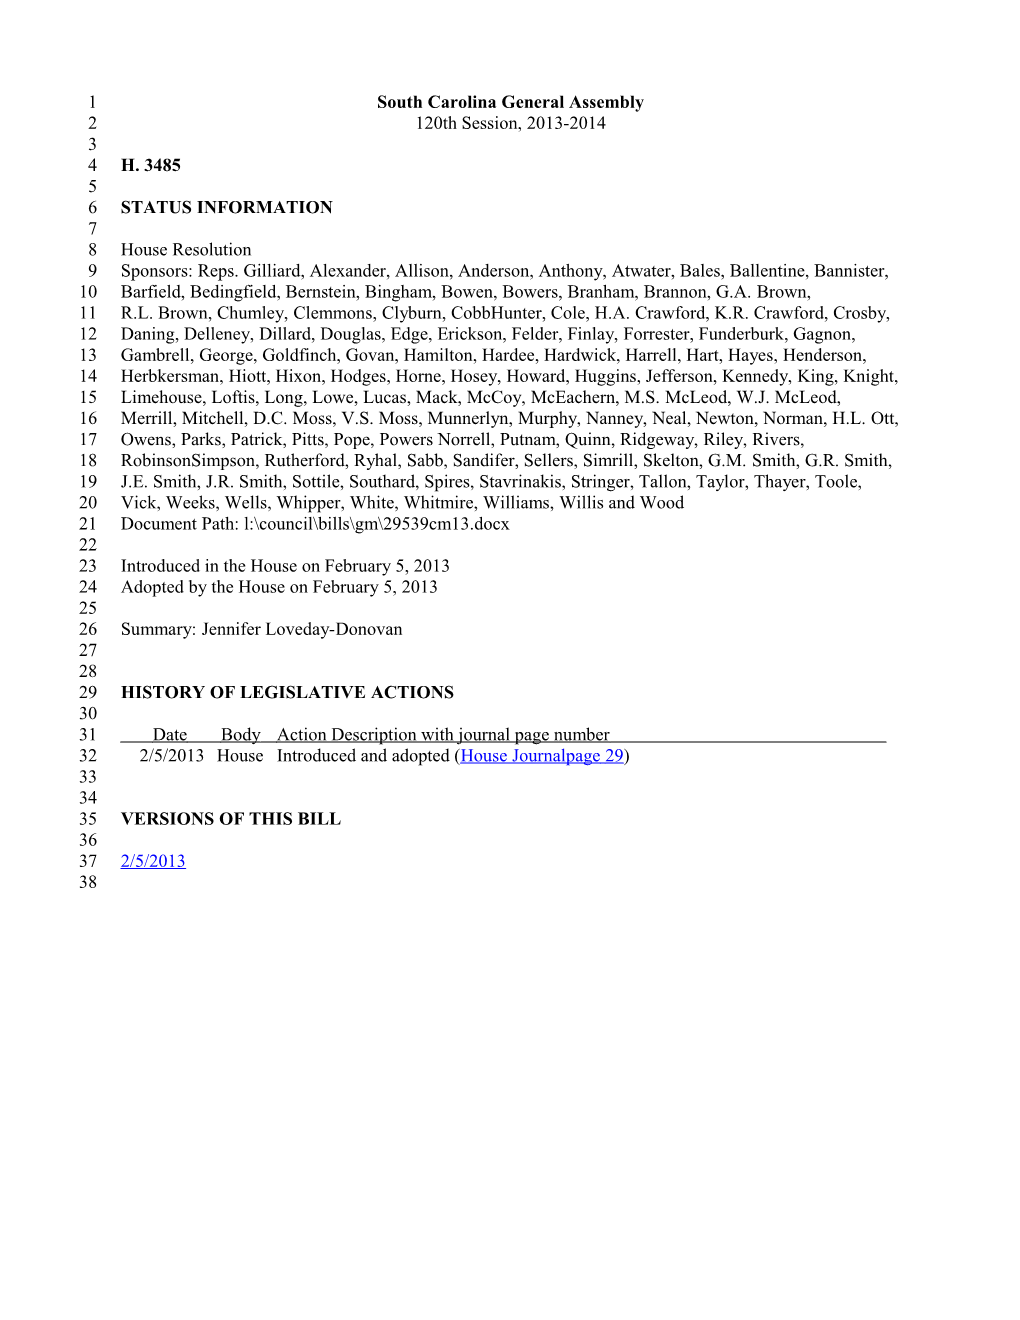 2013-2014 Bill 3485: Jennifer Loveday-Donovan - South Carolina Legislature Online